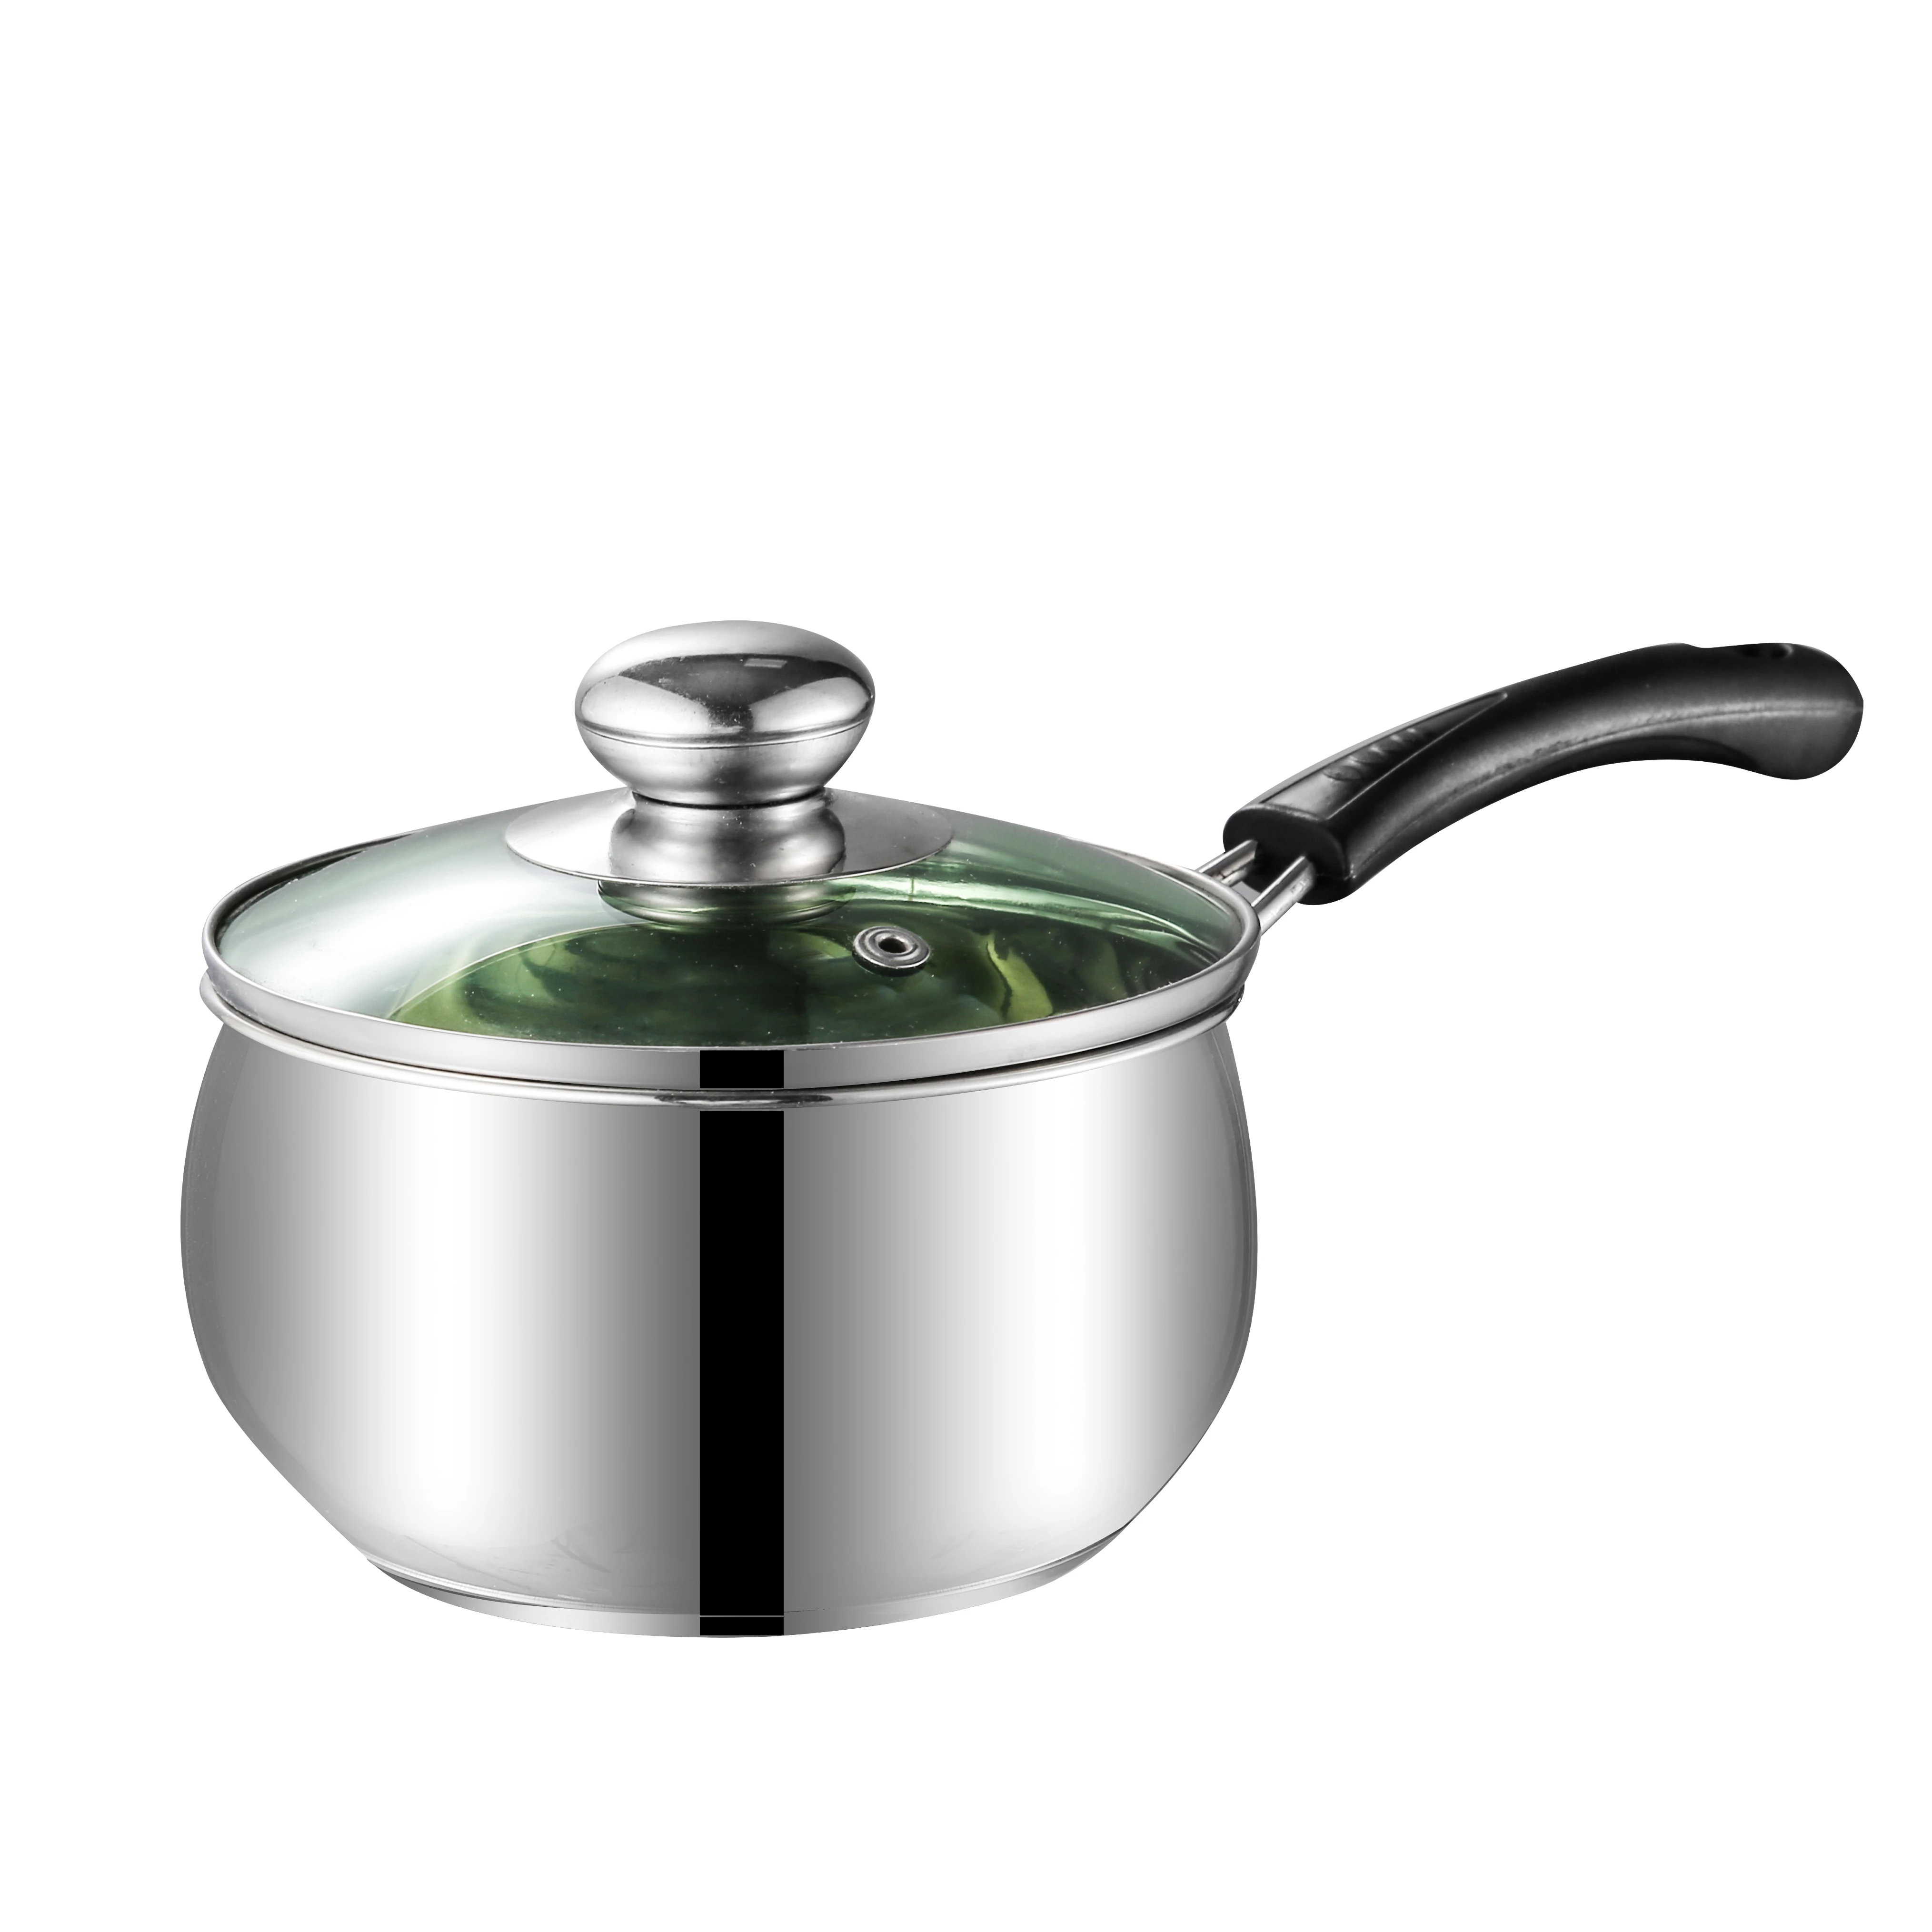 Kitchen Milk Saucepans Milk Boiling Pot Stainless Steel Sauce Pan With Lid